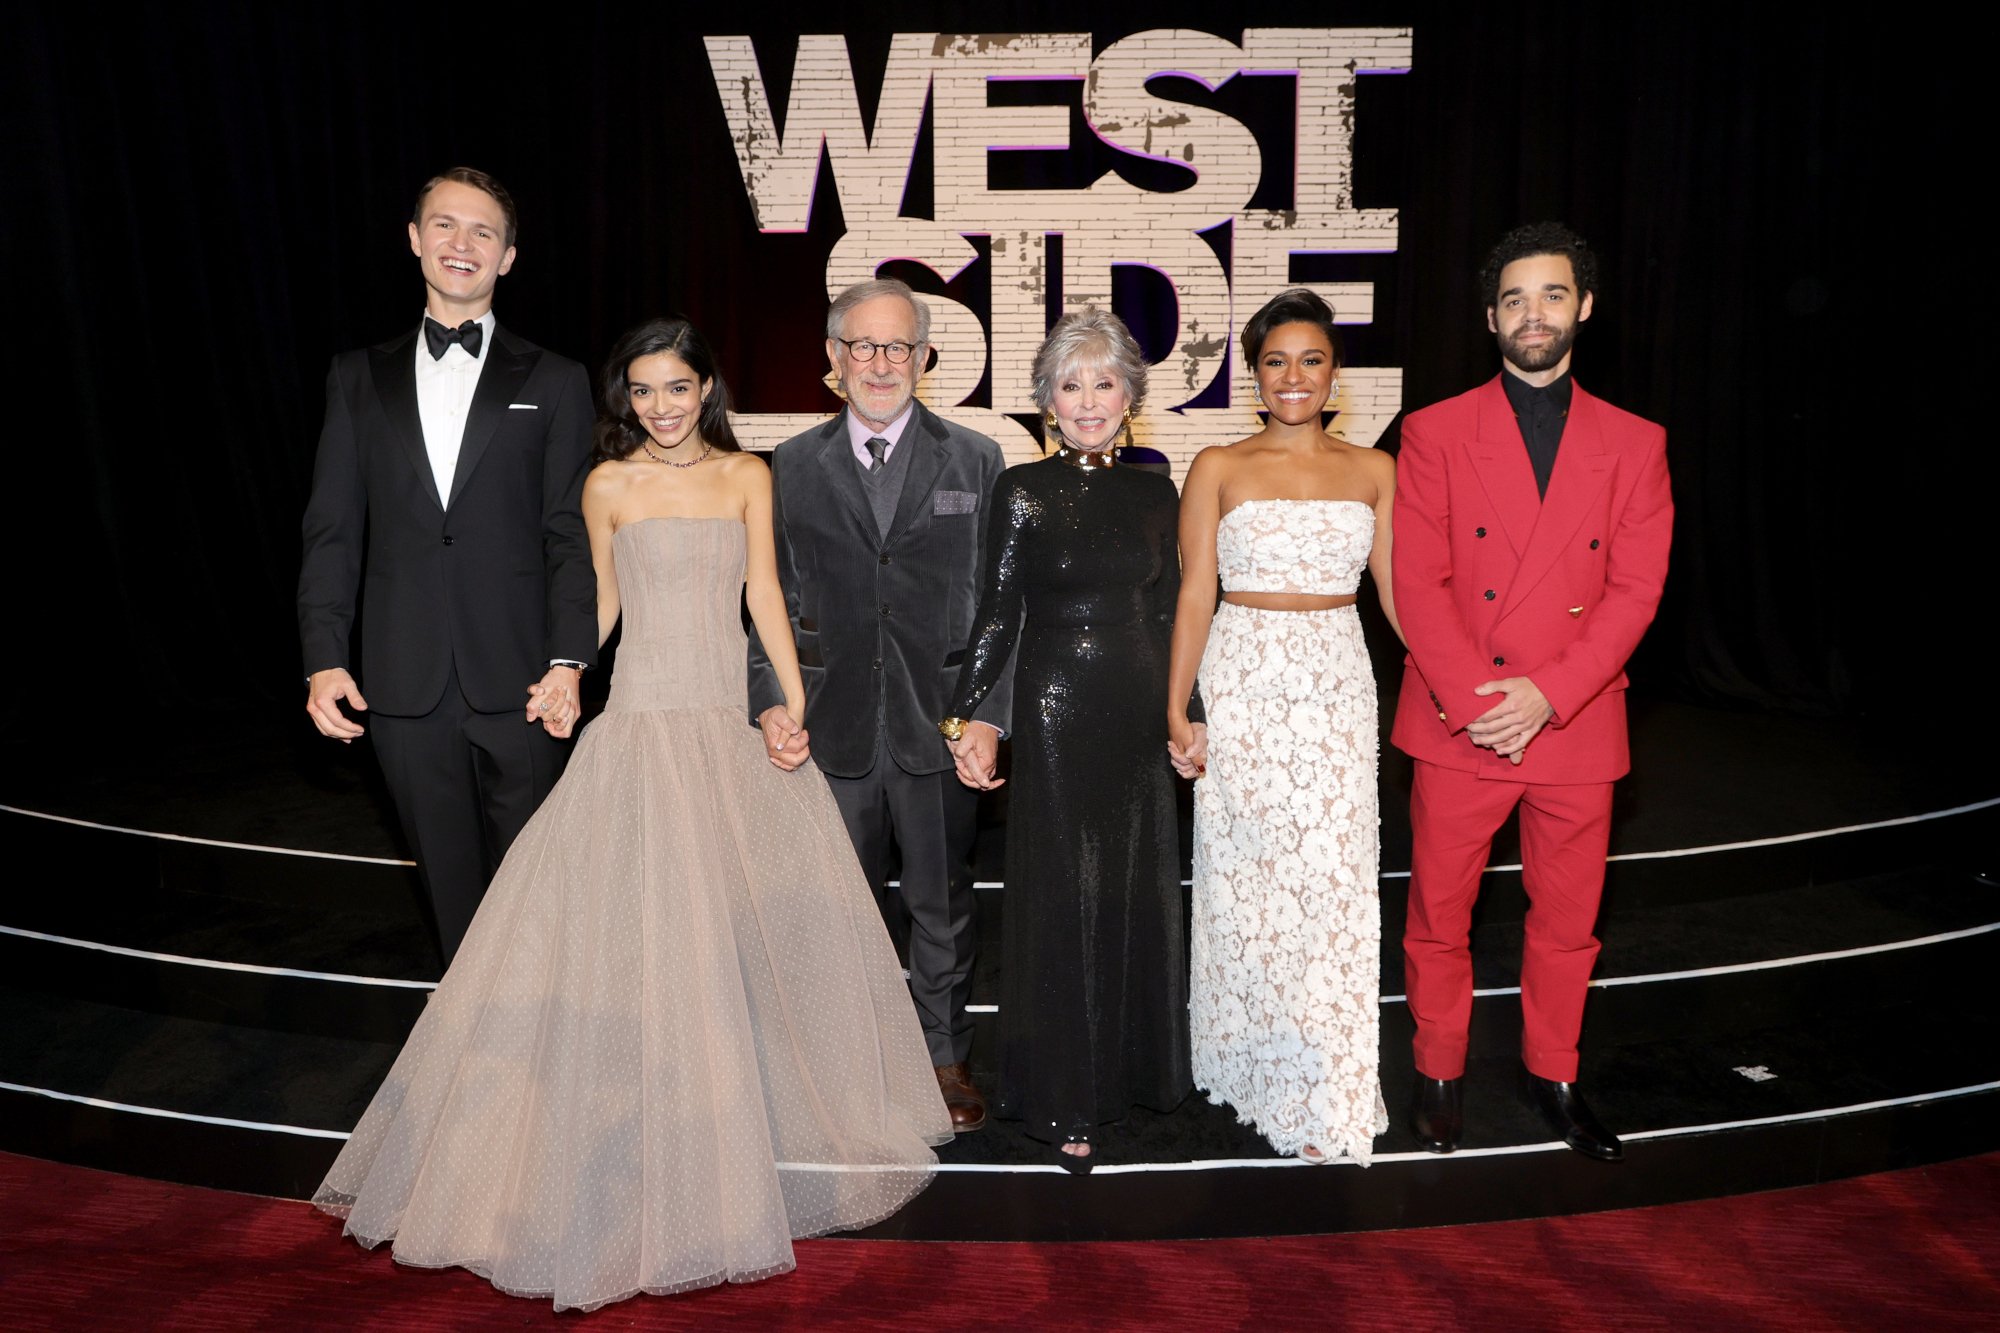 'West Side Story' Ansel Elgort, Rachel Zegler, Steven Spielberg, Rita Moreno, Ariana DeBose, and David Alvarez holding hands in front of the movie title logo